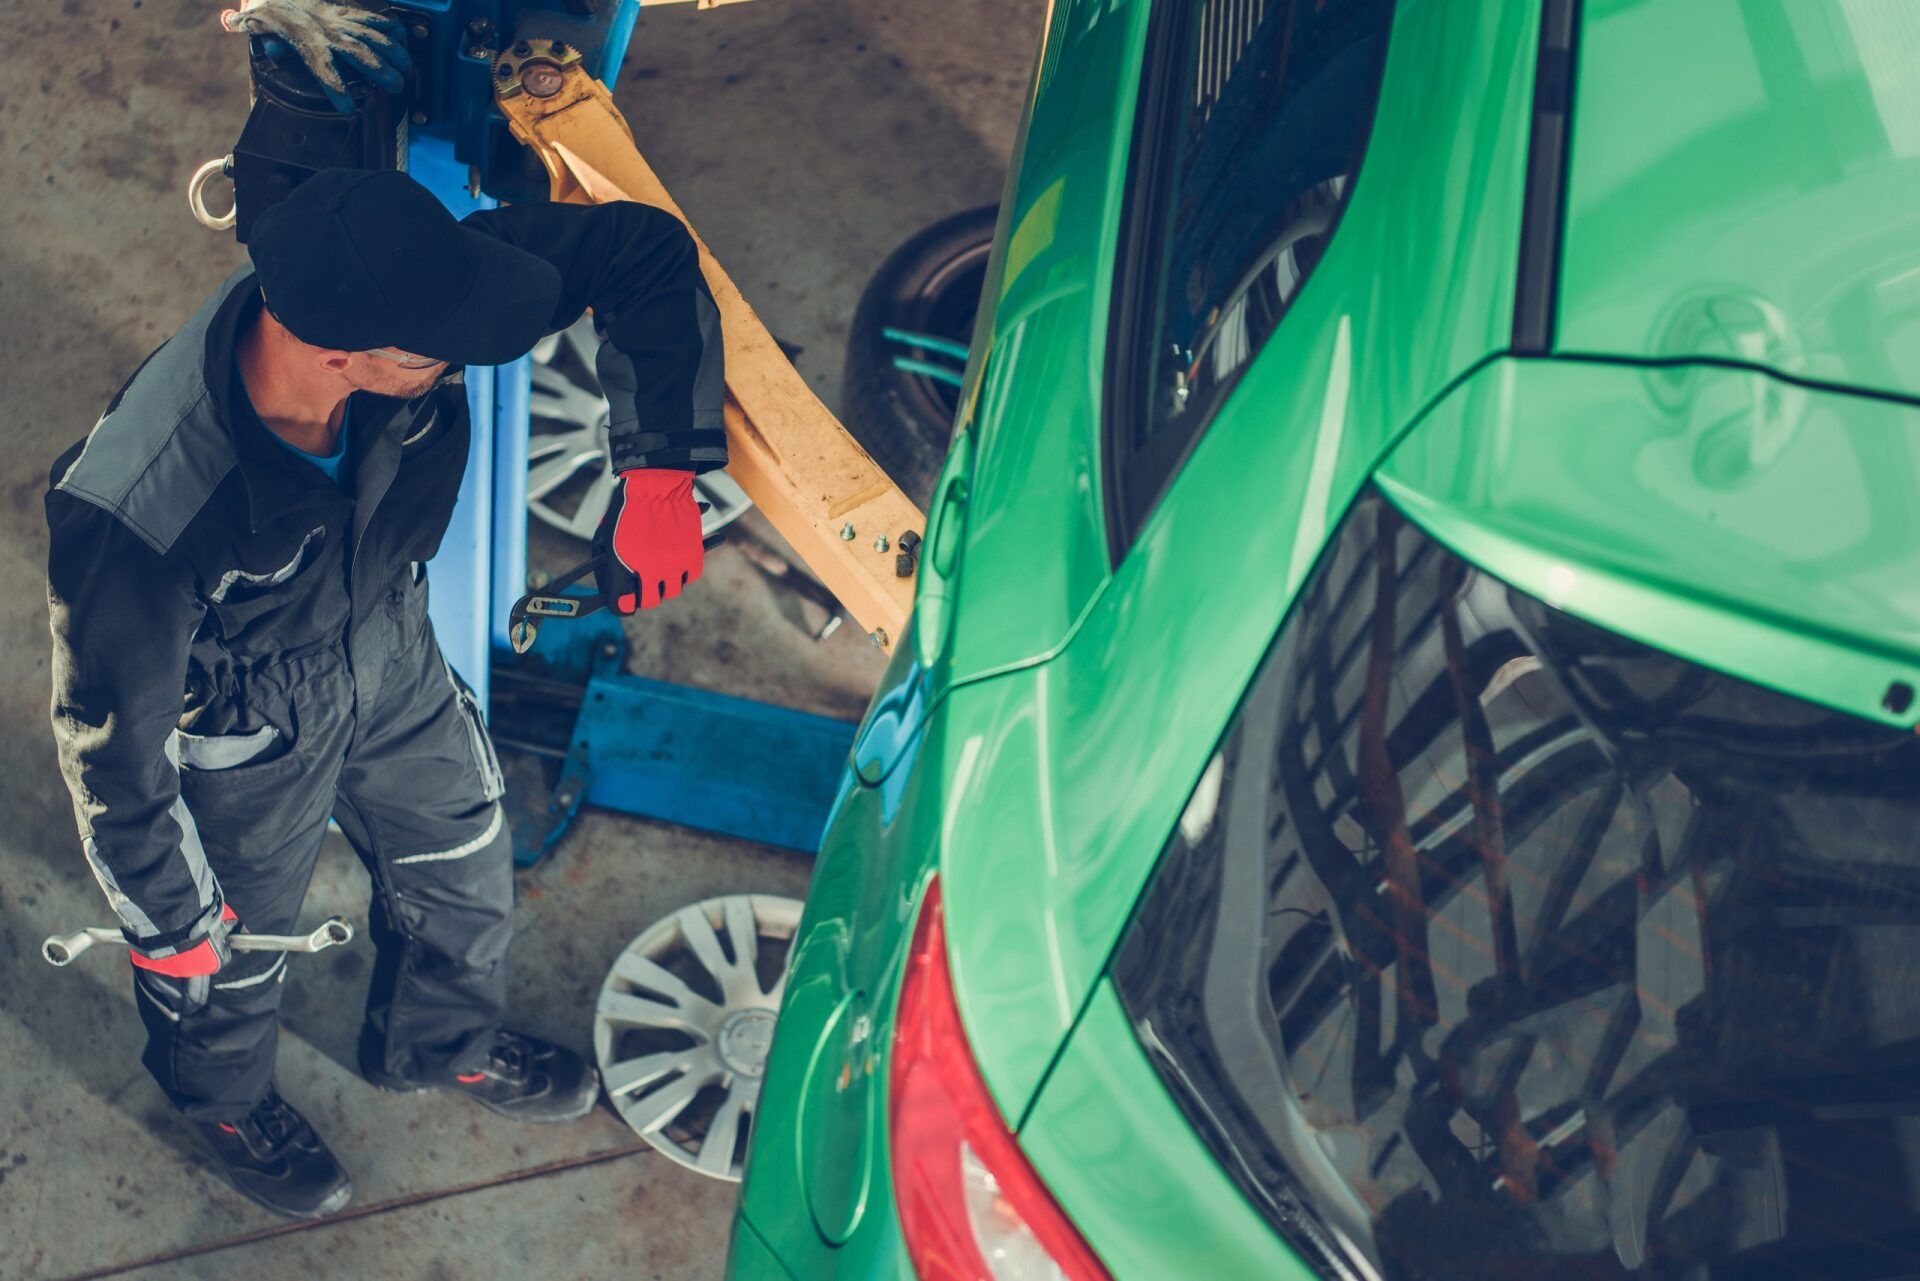 Spokane Valley Auto Repair Services - Green Tech Garage